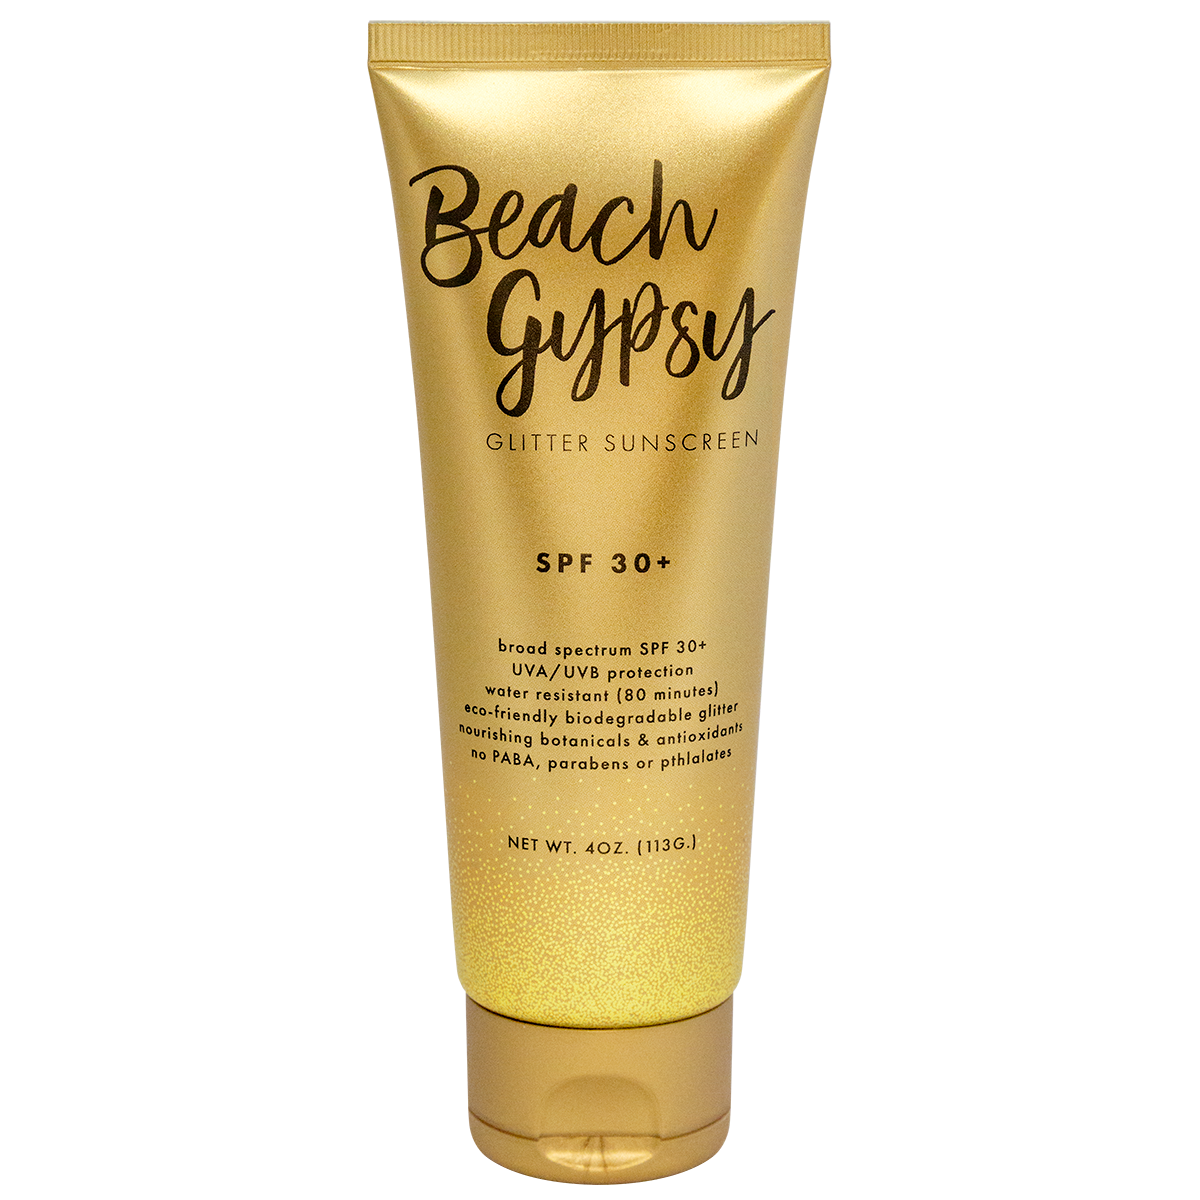 Beach Gypsy Glitter Sunscreen - SPF 30+